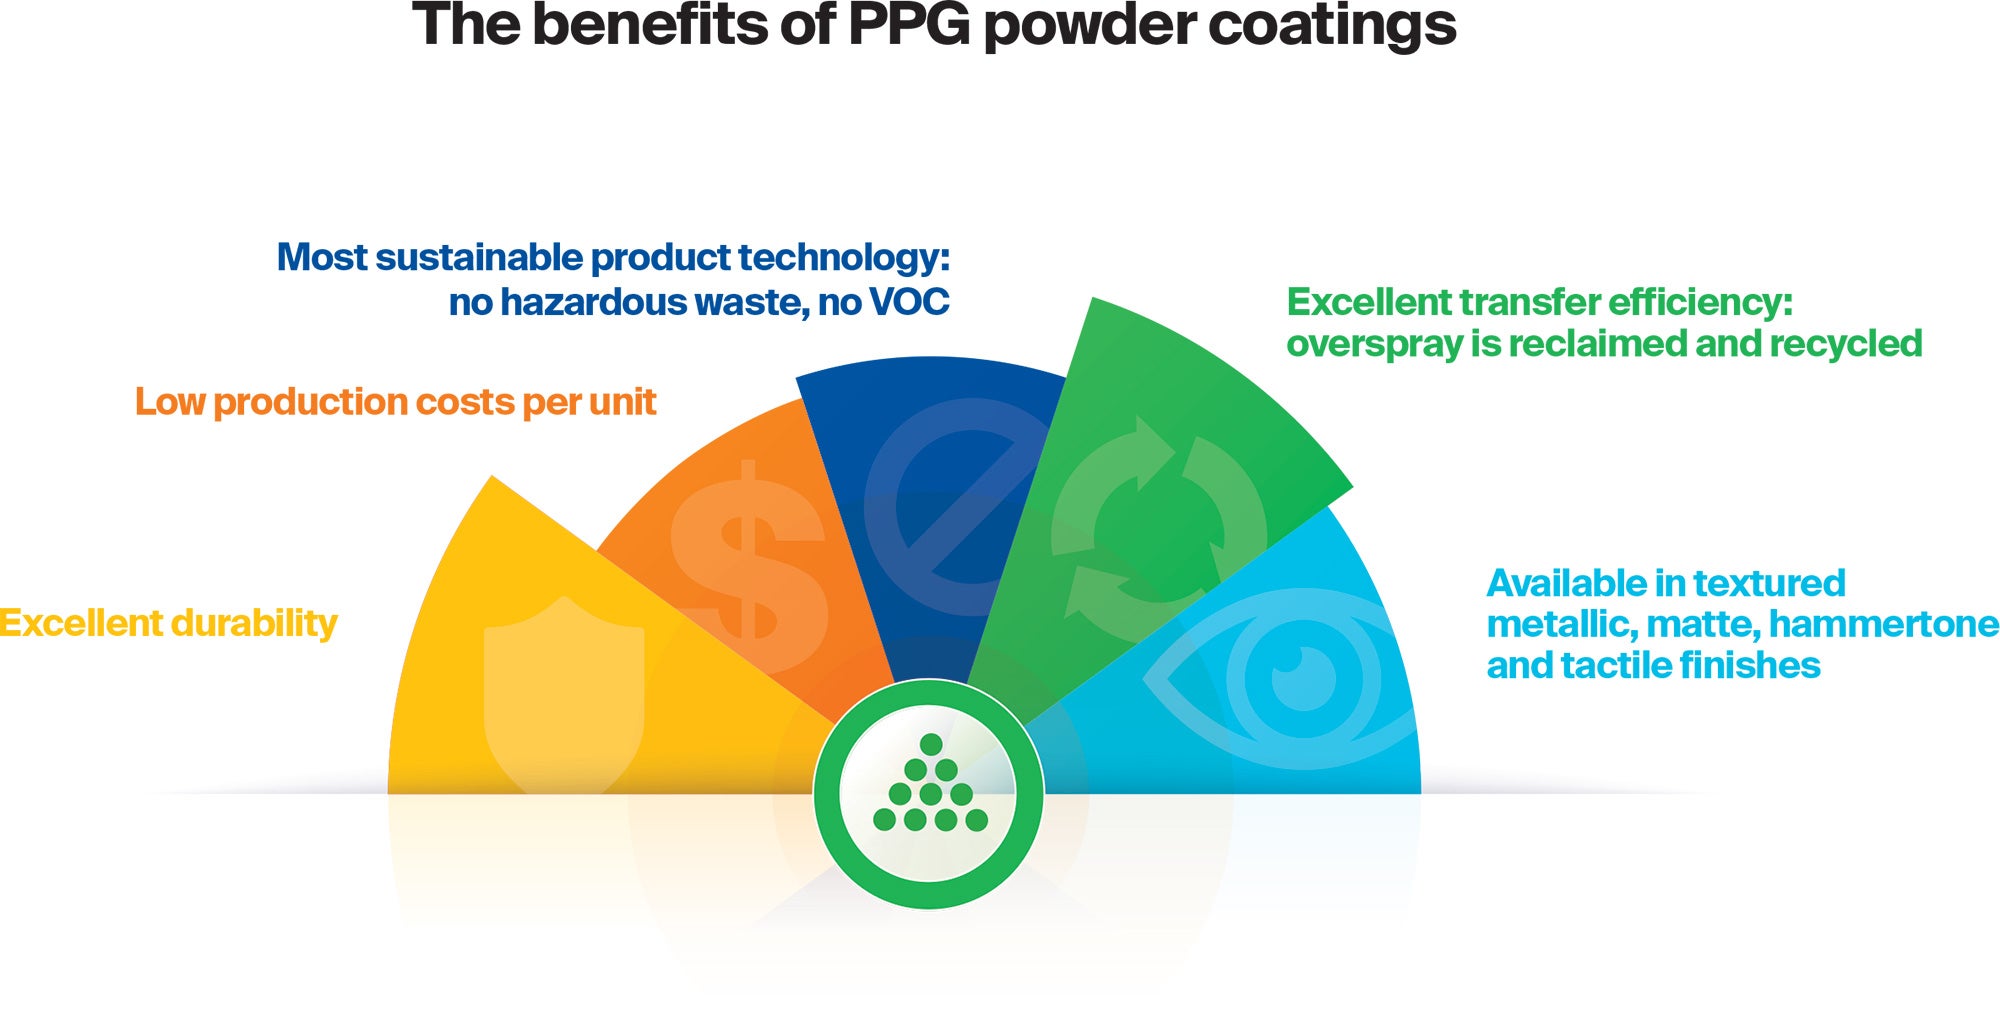 Benefits of PPG powder coatings image: PPG powder coatings benefits